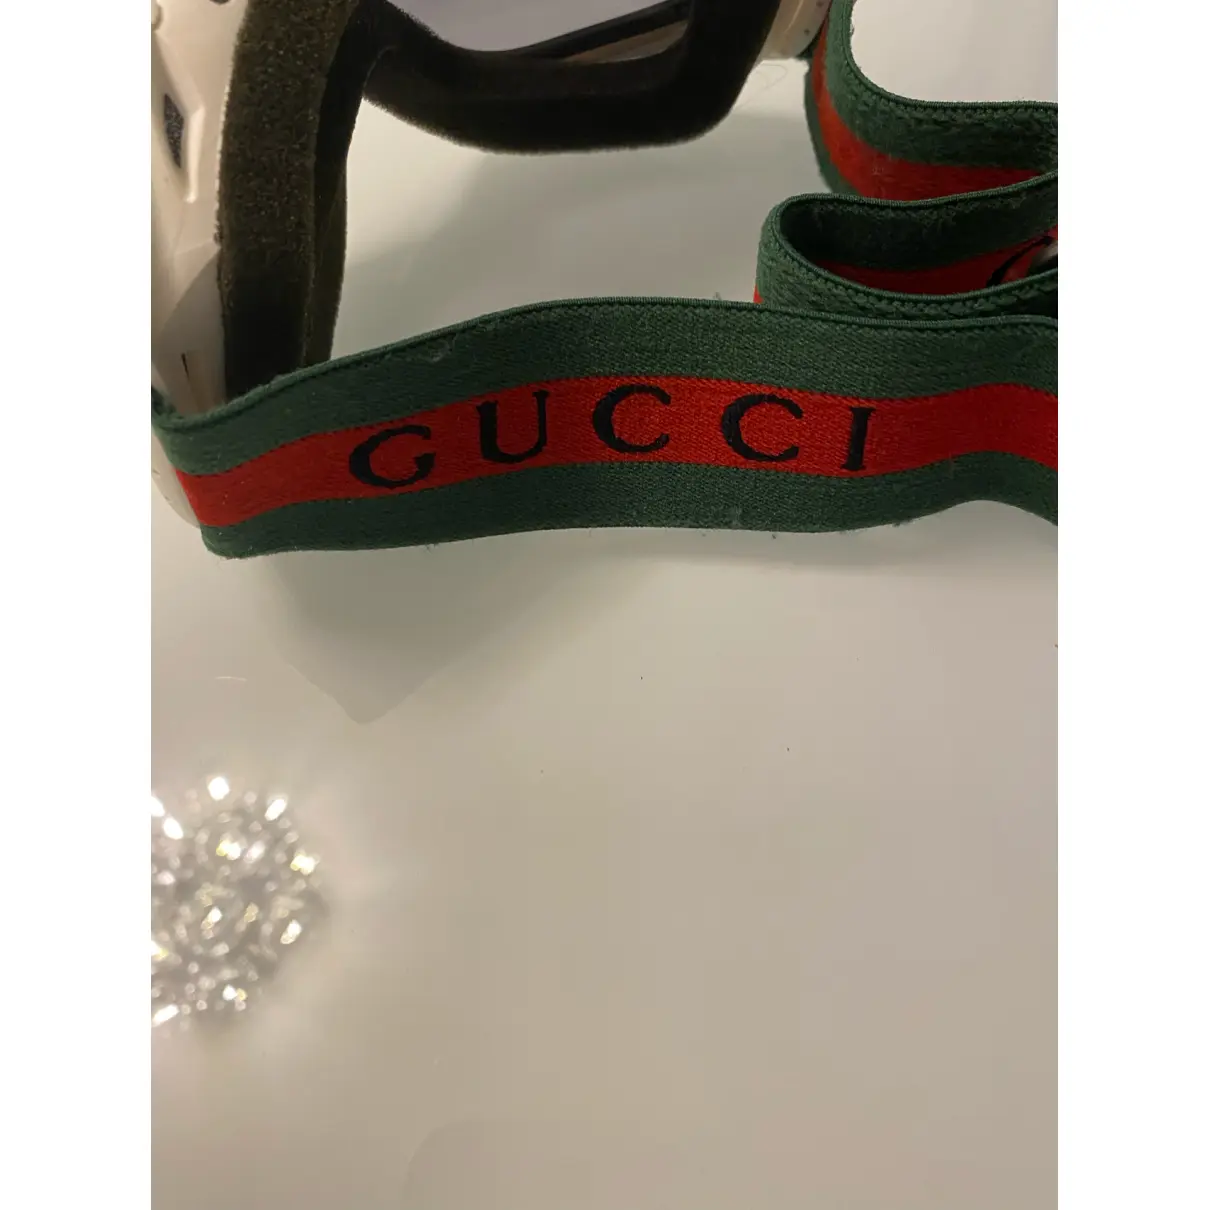 Buy Gucci Boards online